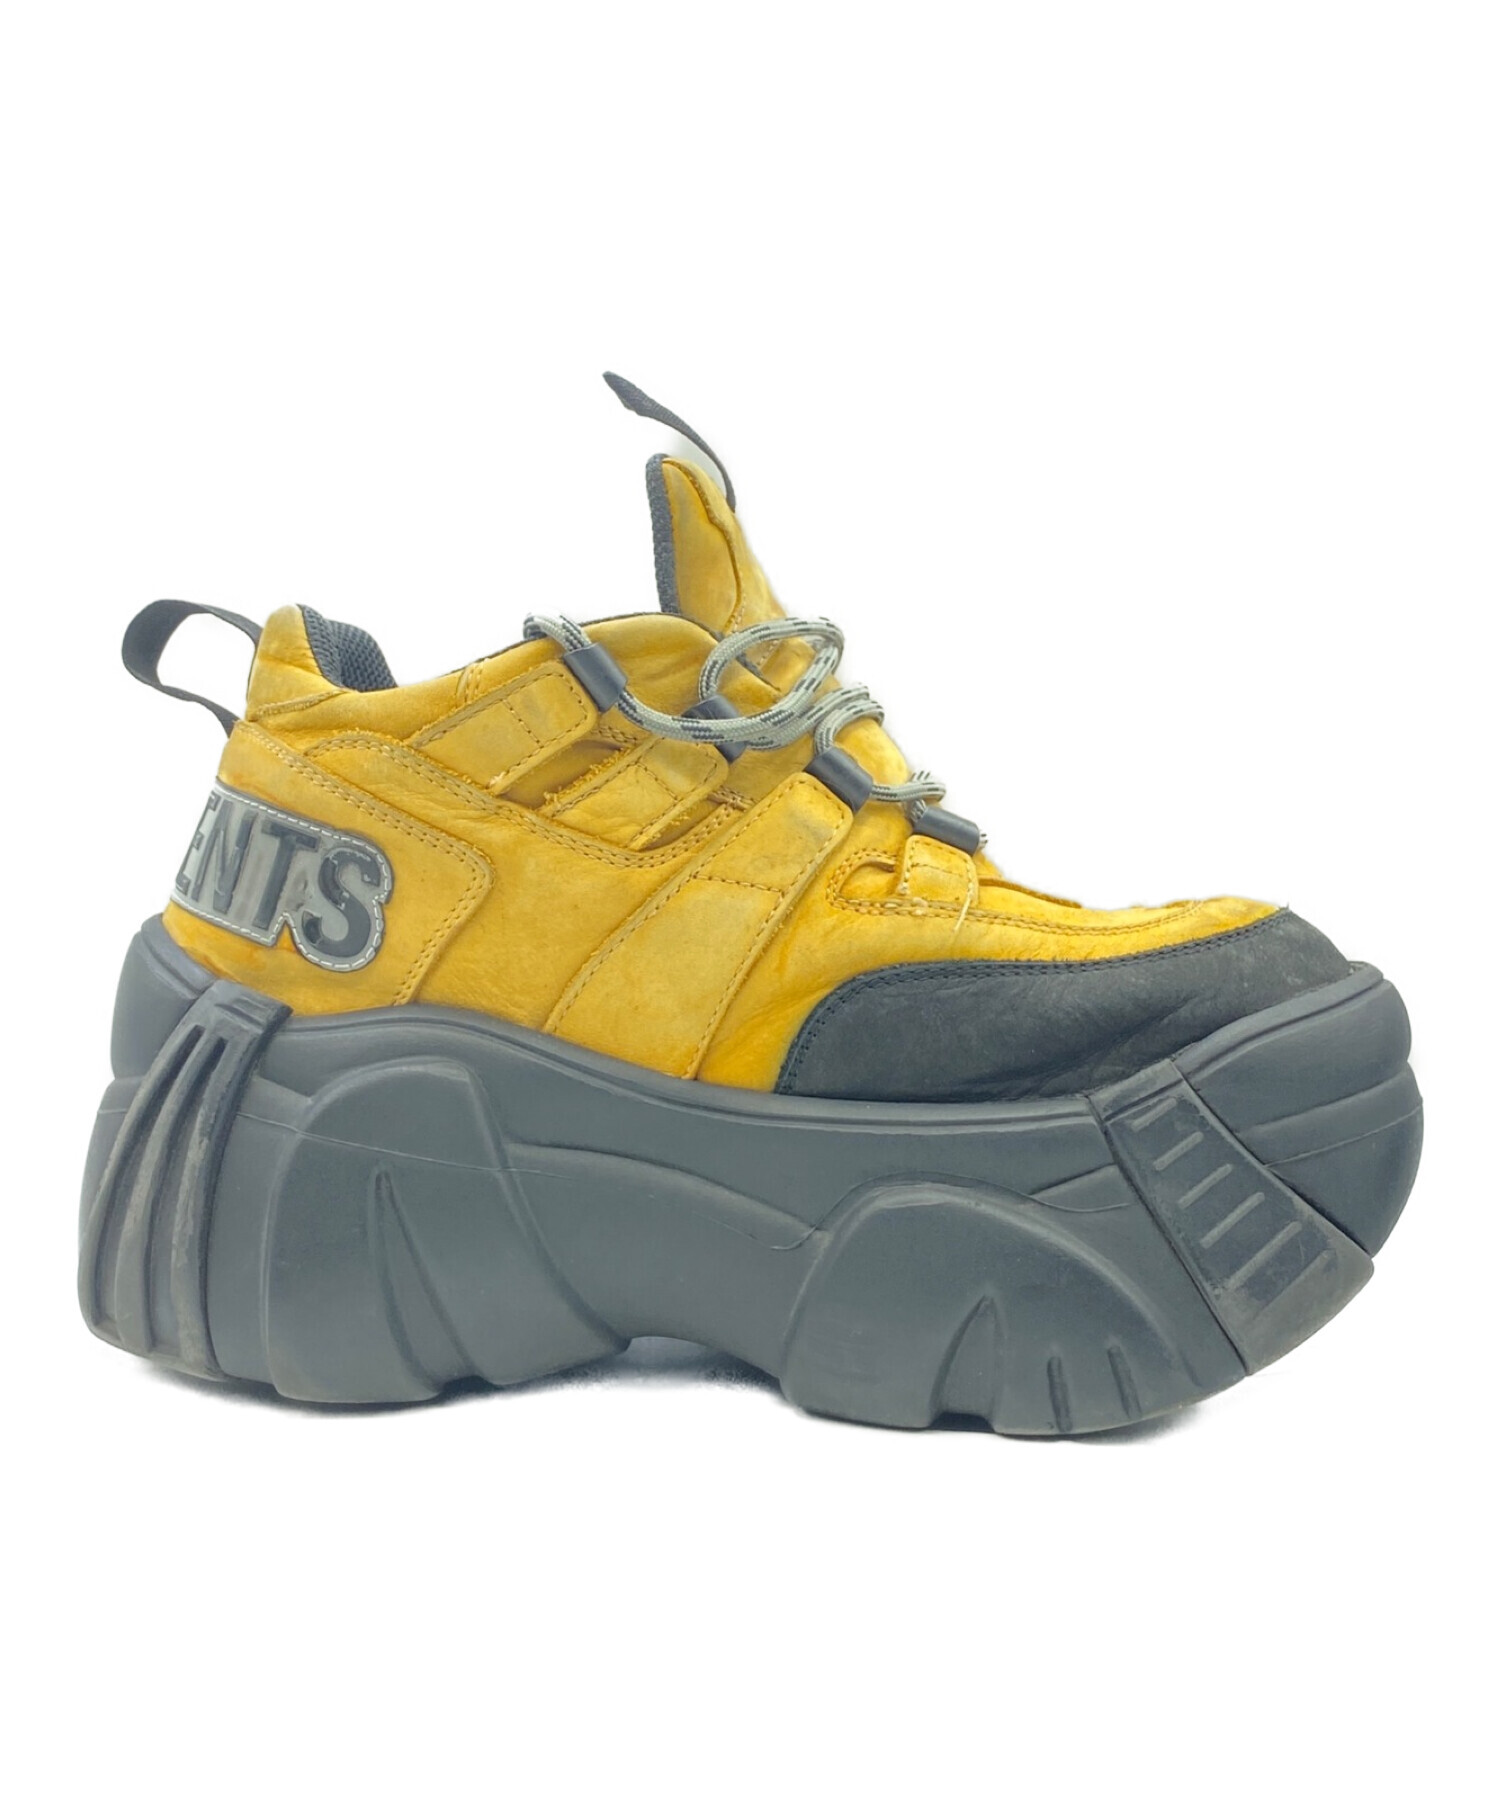 VETEMENTS (ヴェトモン) SWEAR (スウェア) Nubuck Platform Sneakers ブラウン サイズ:25.8cm (US  8.5)